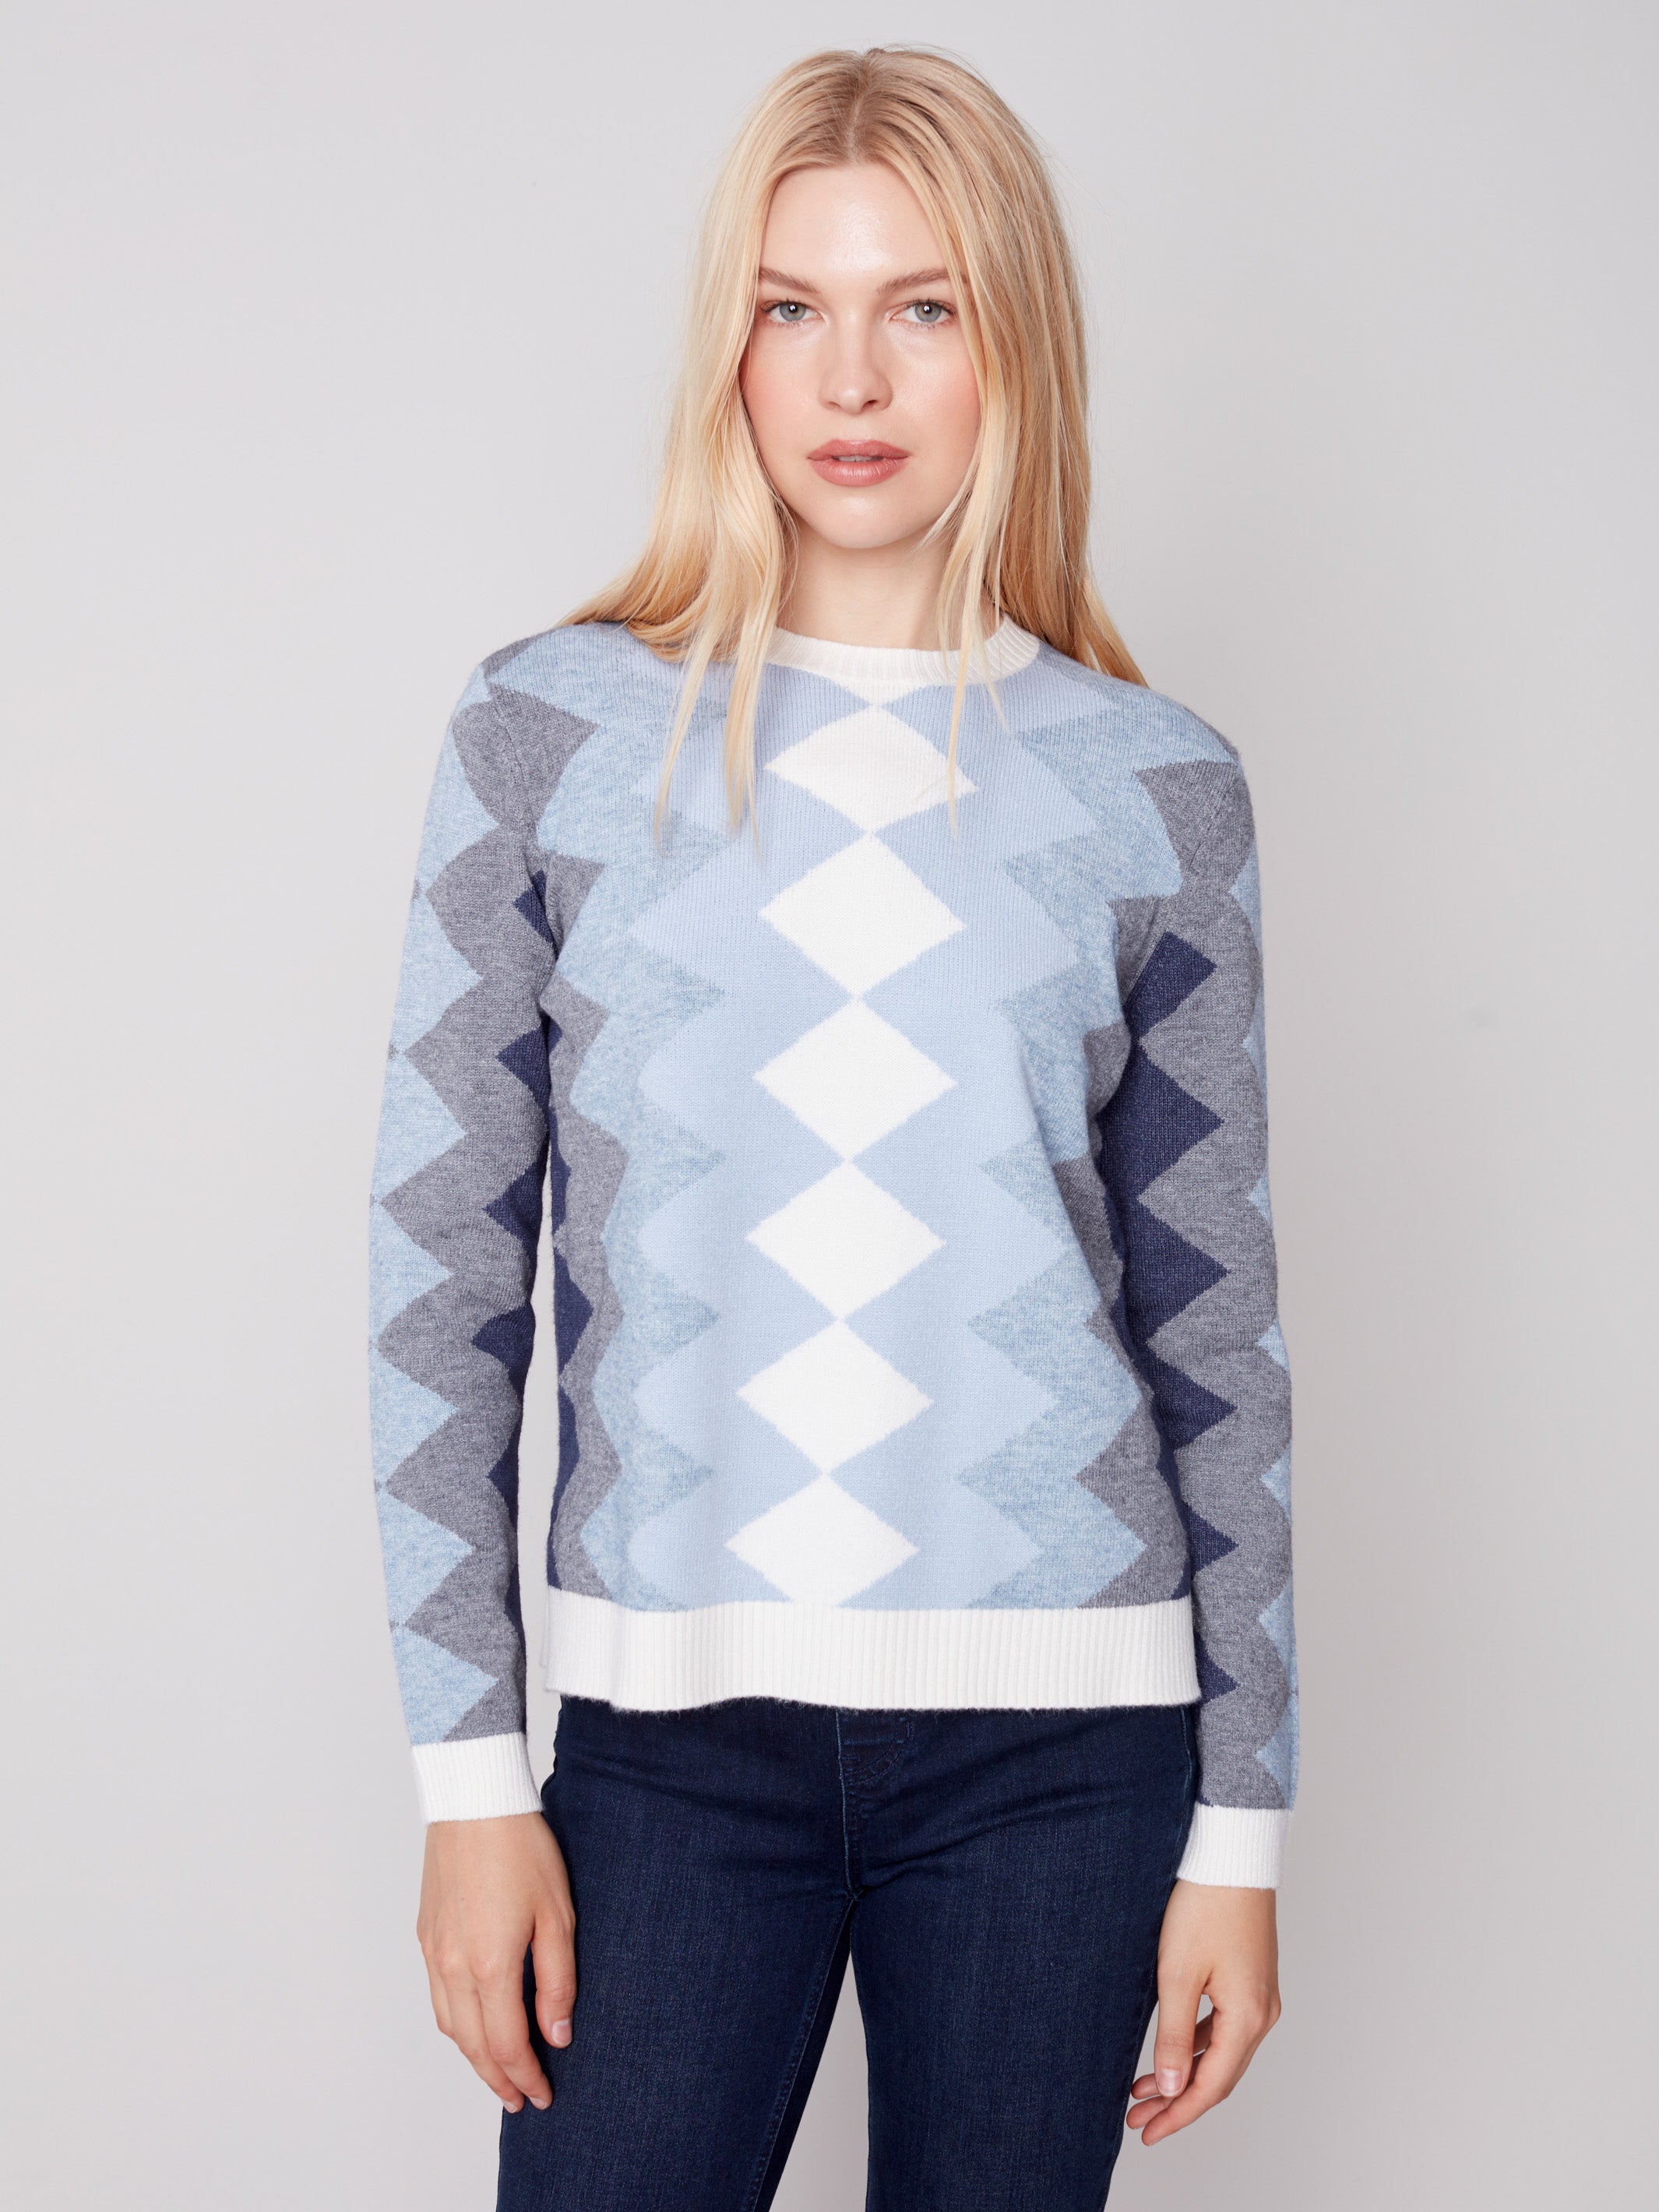 Jacquard Sweater with Zig Zag Design - Snowflake